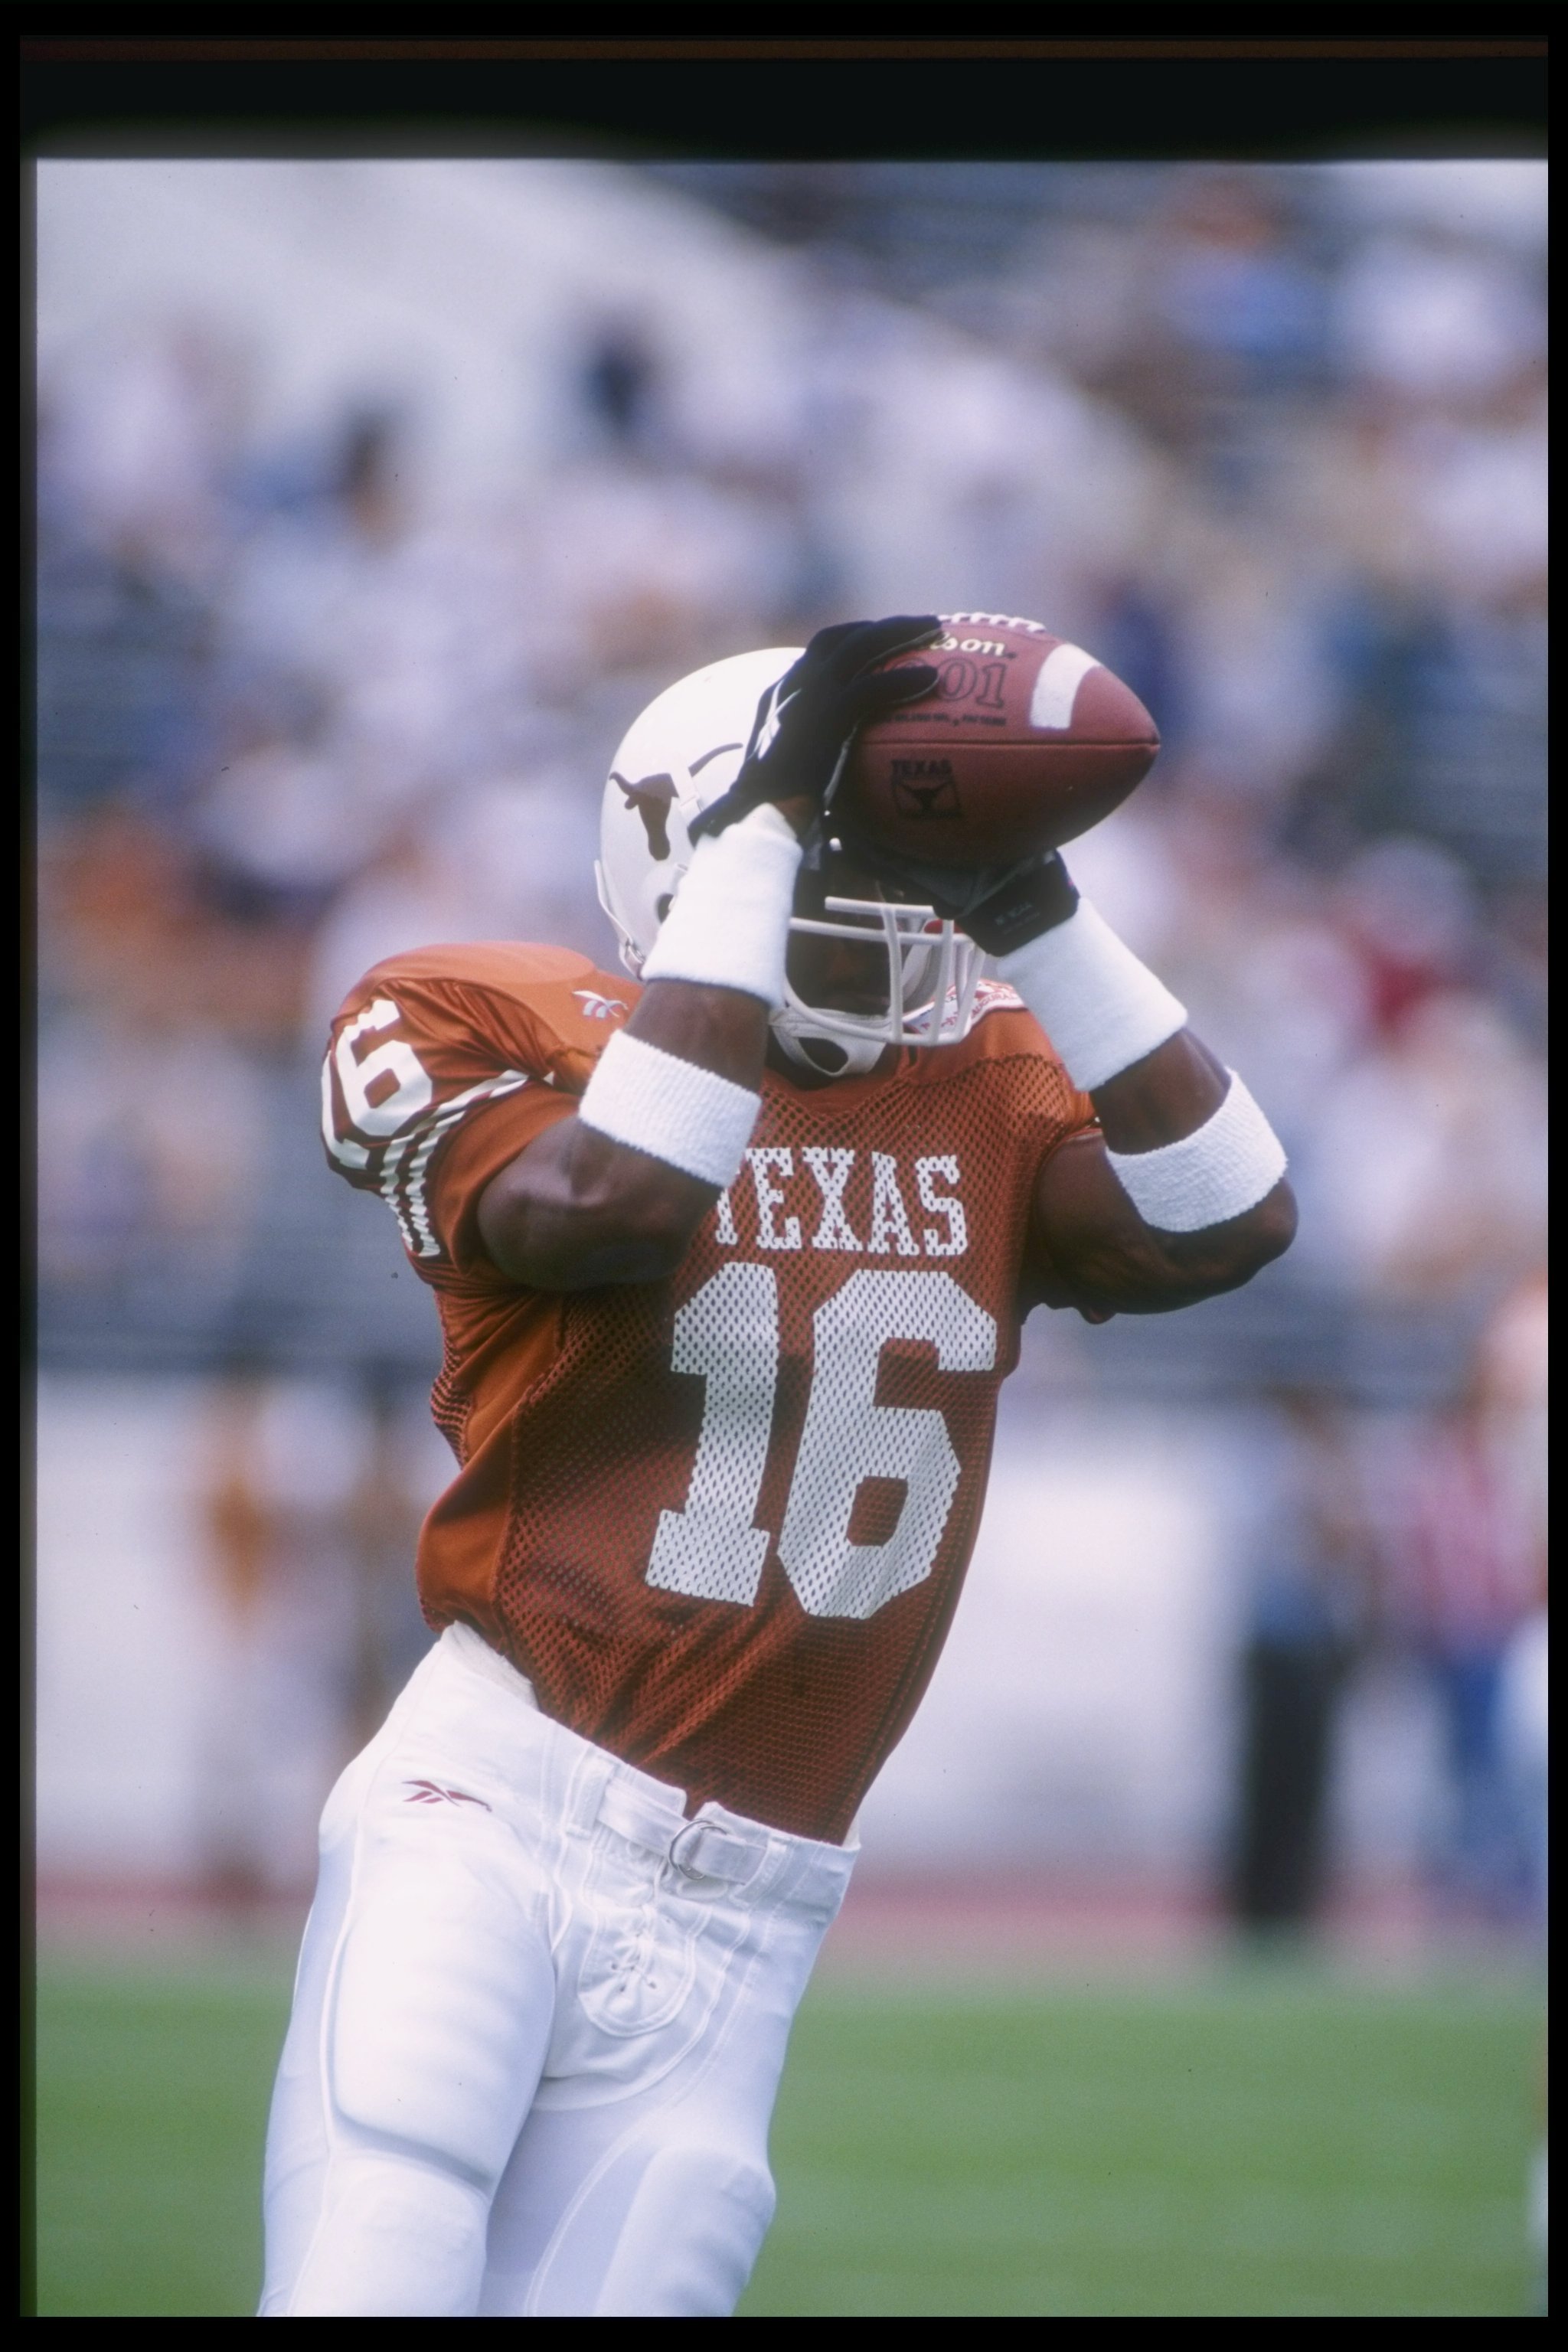 Texas' All-Time #3 DB- Chris Carter